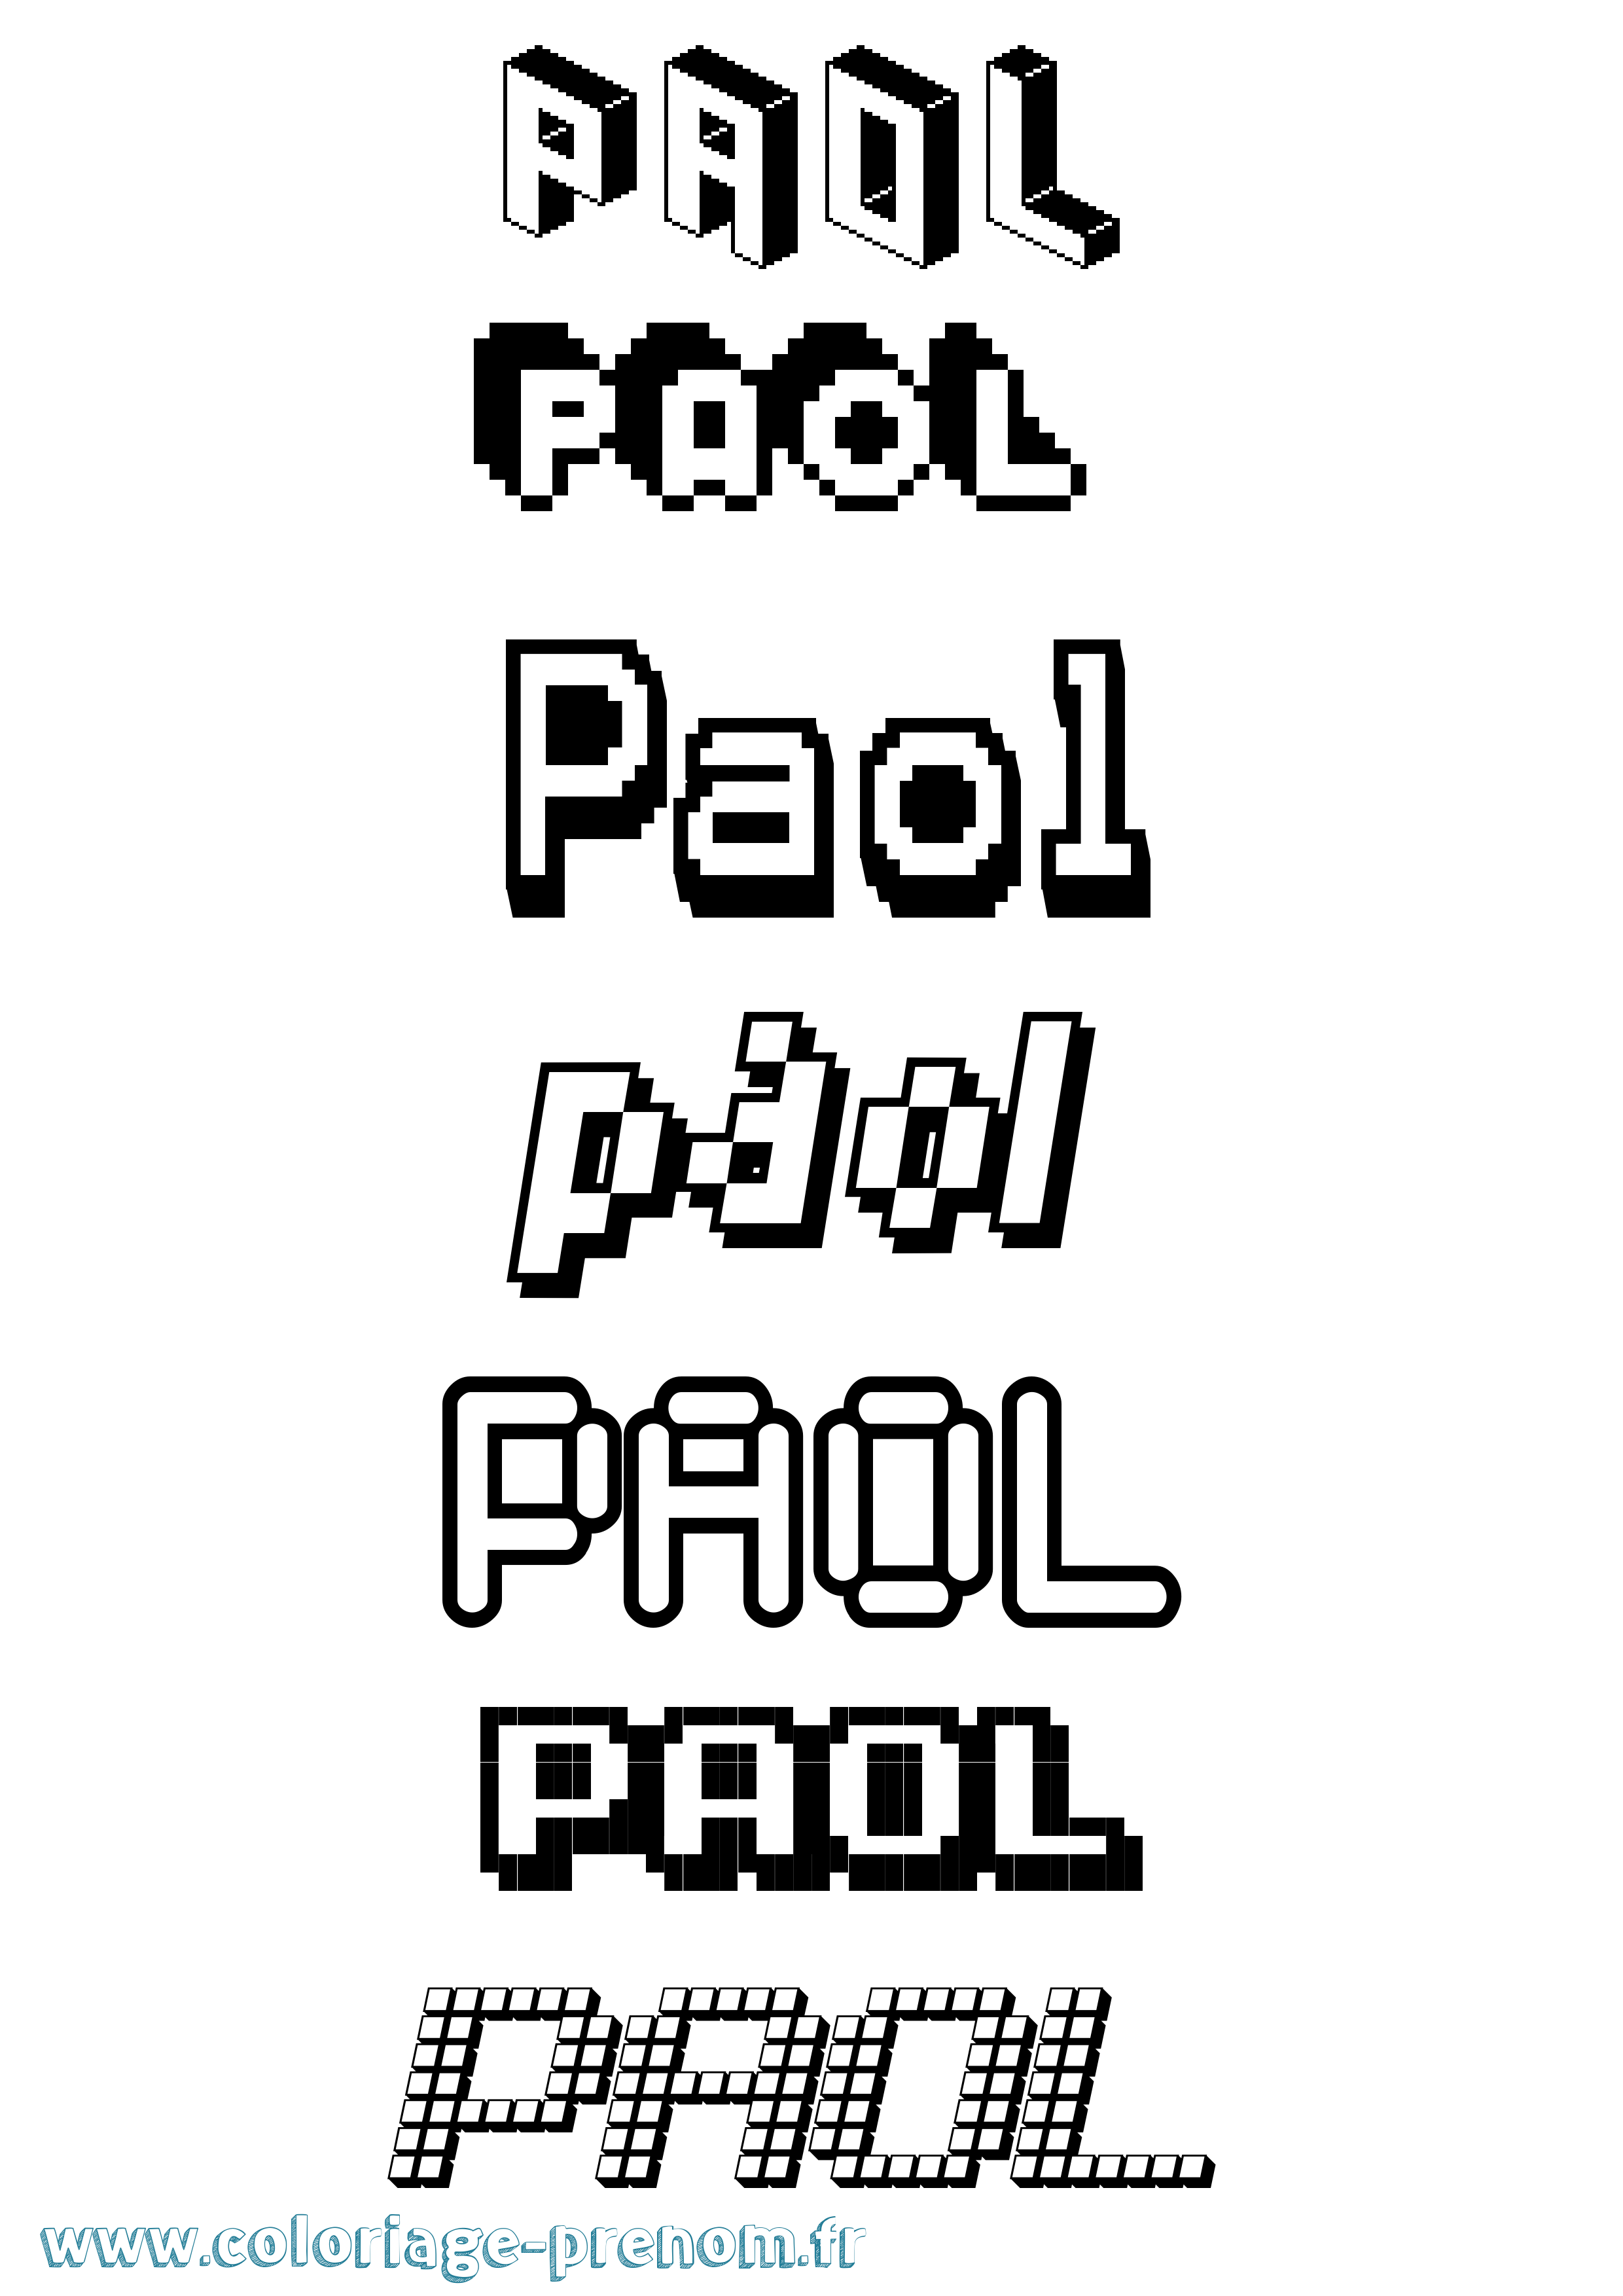 Coloriage prénom Paol Pixel